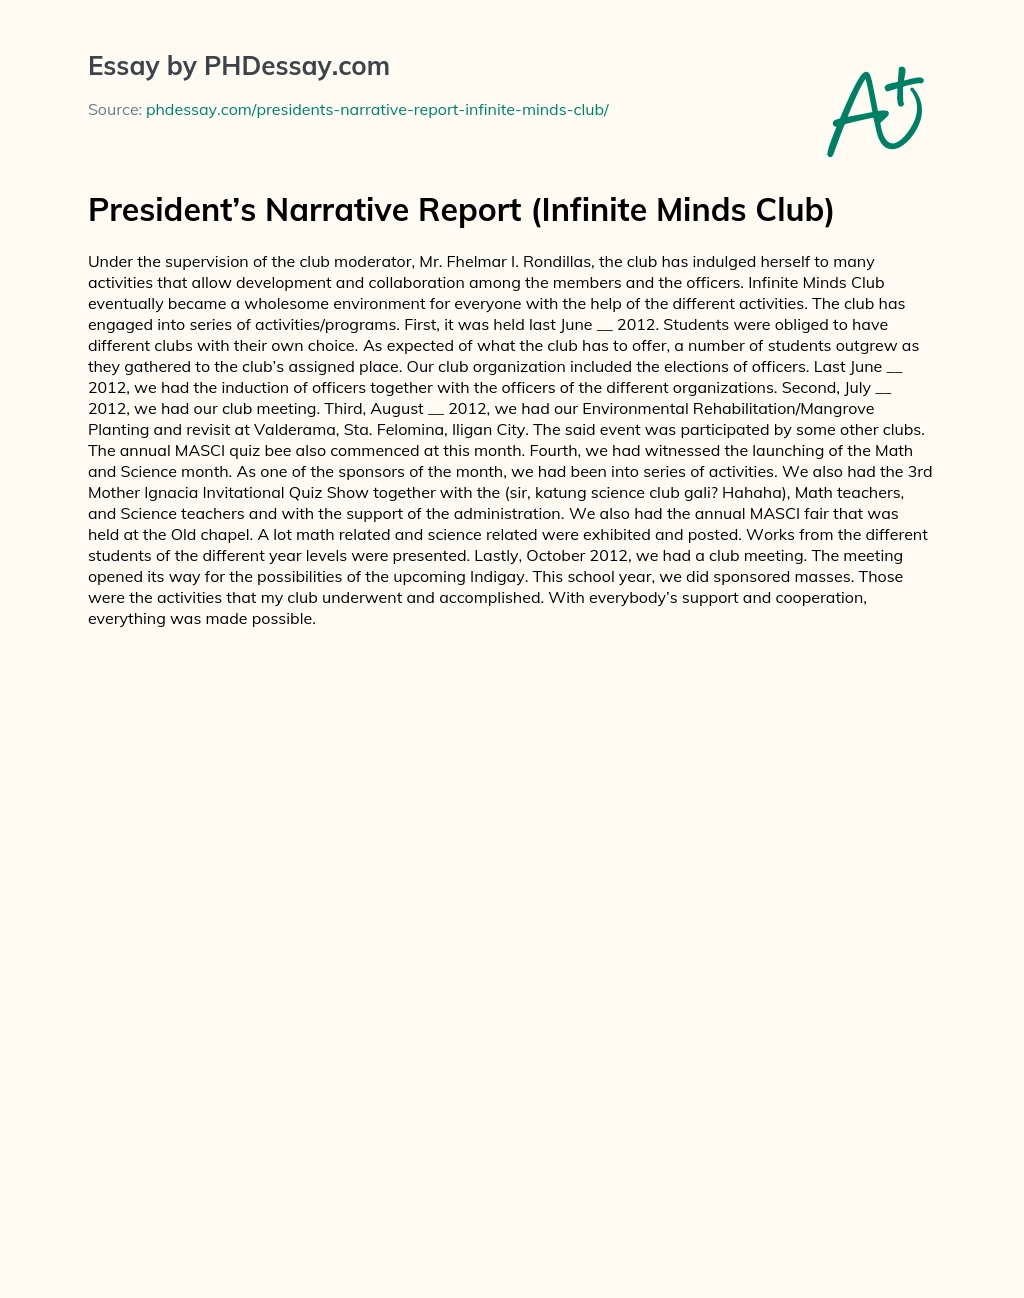 President’s Narrative Report (Infinite Minds Club) essay